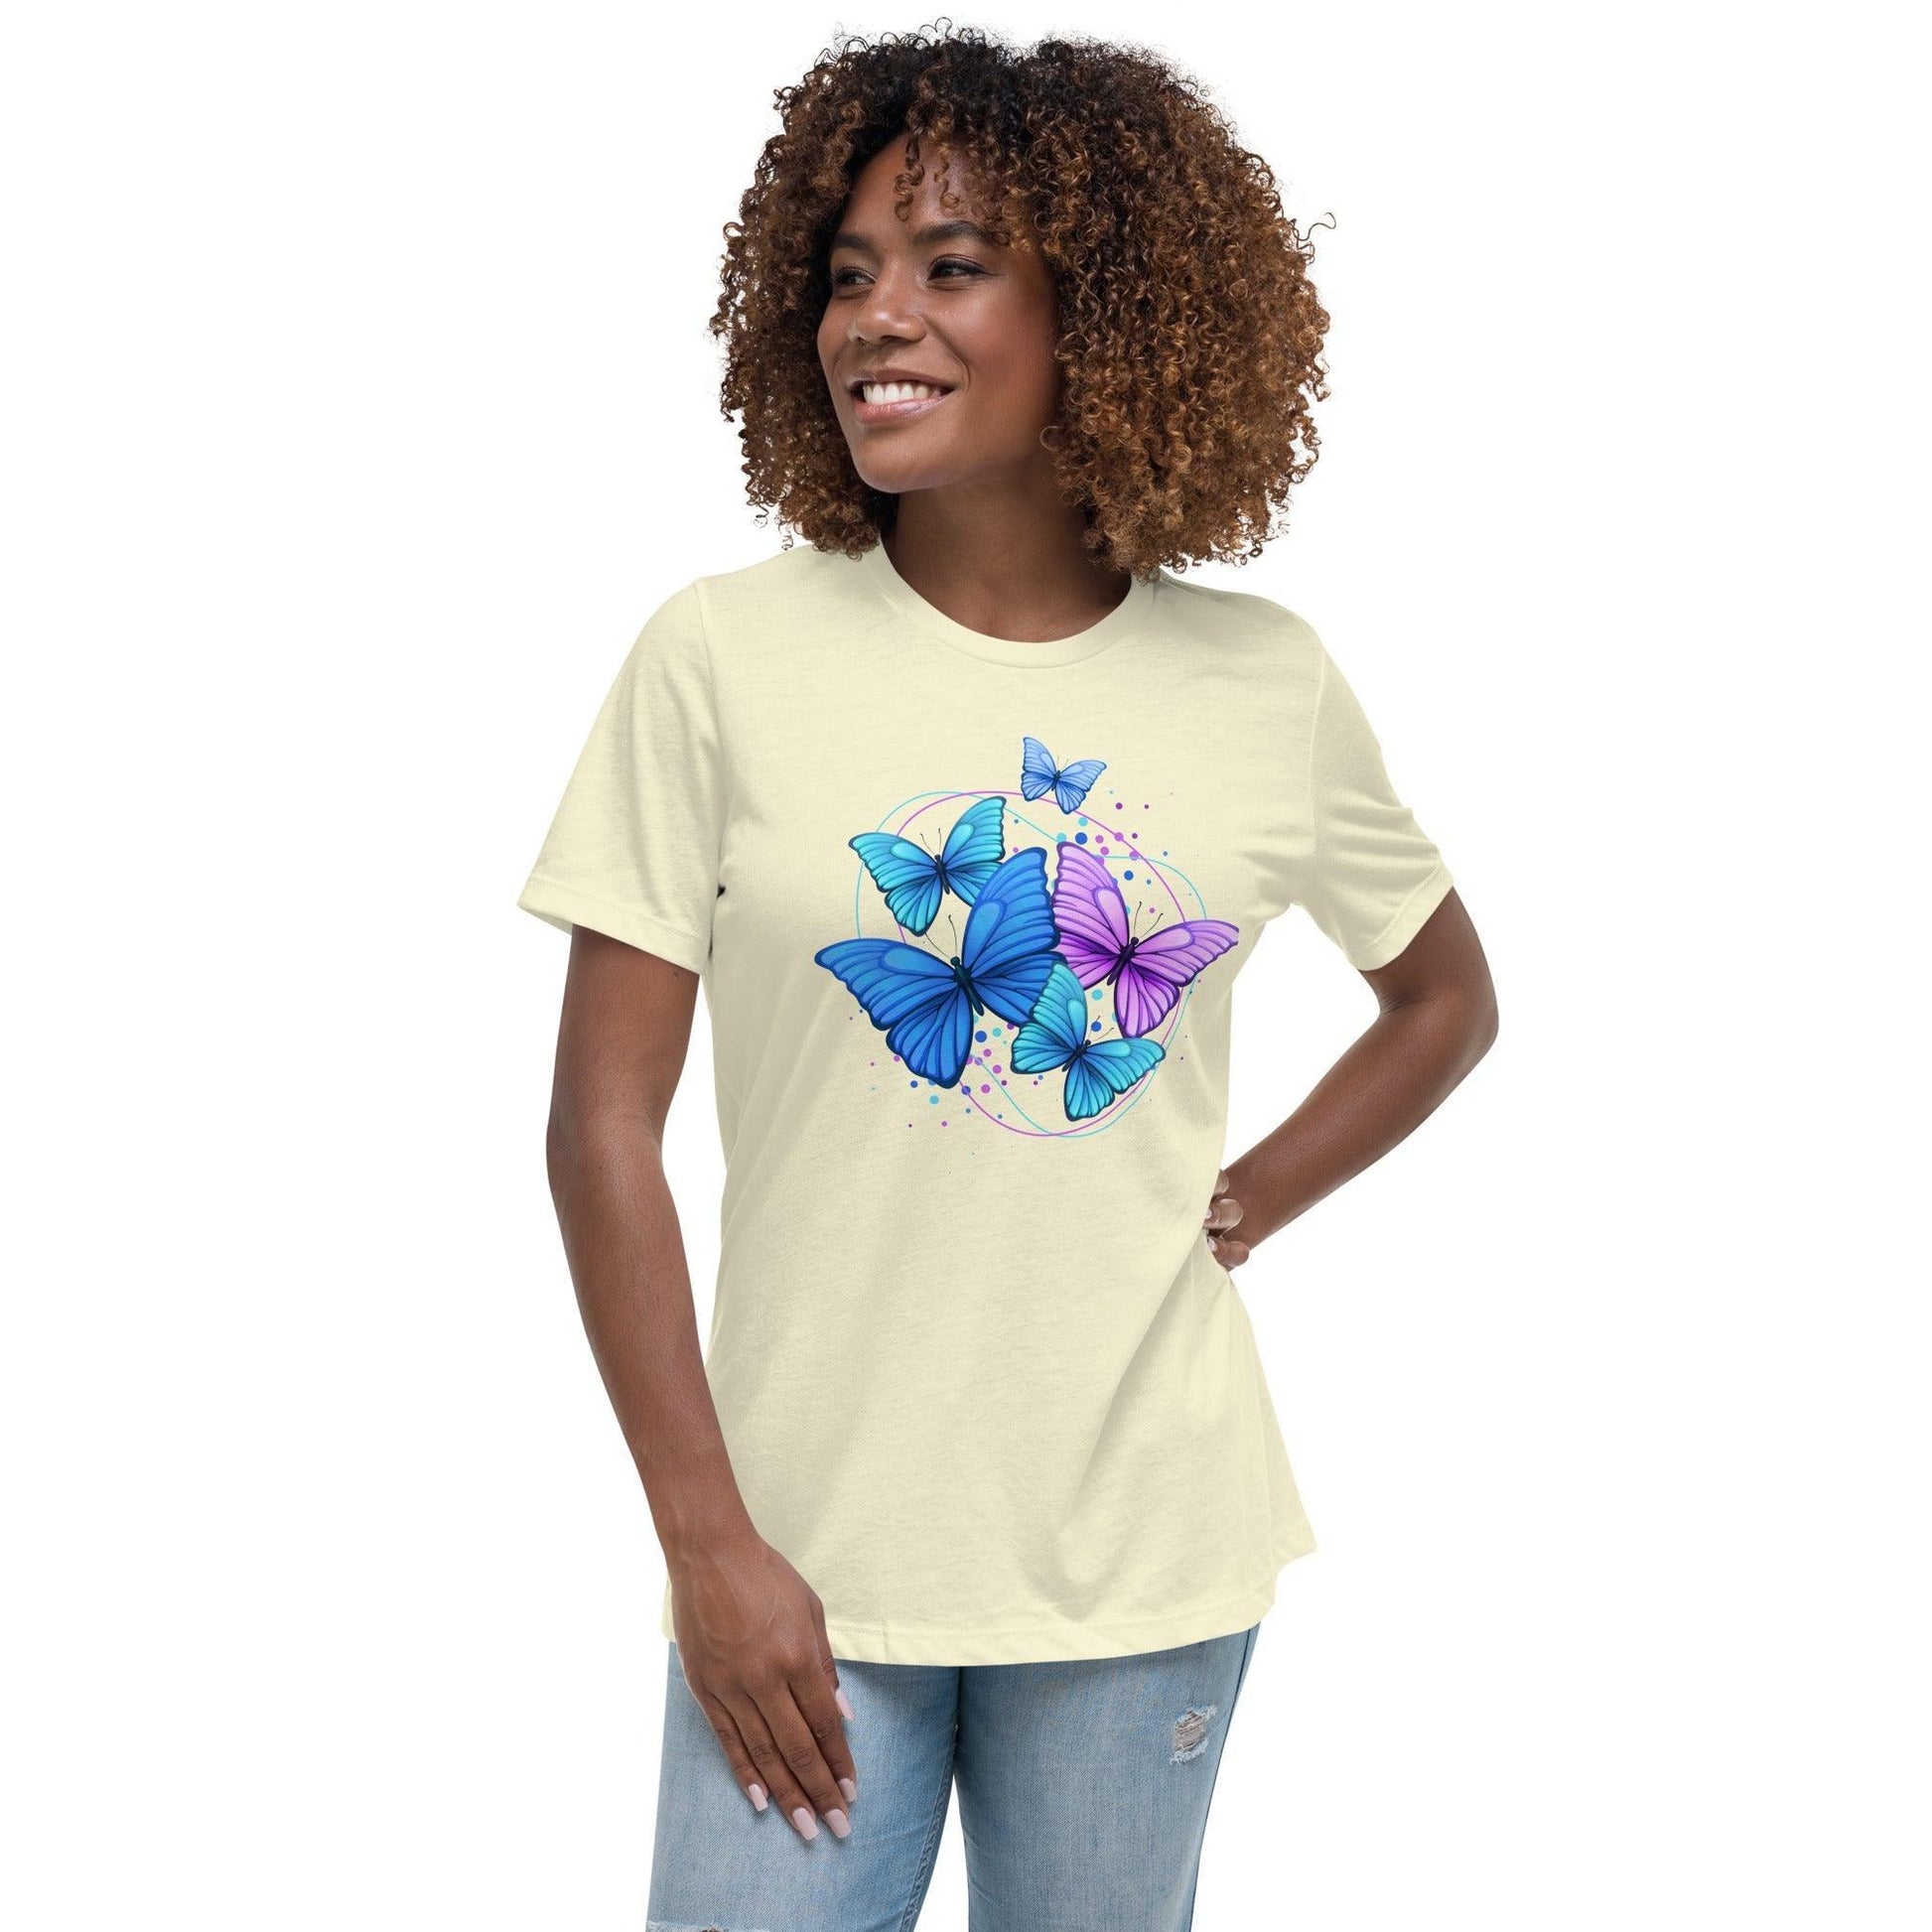 Camiseta suelta "Mariposal" | ¡La camiseta perfecta para un look alegre y femenino! - Silvornique